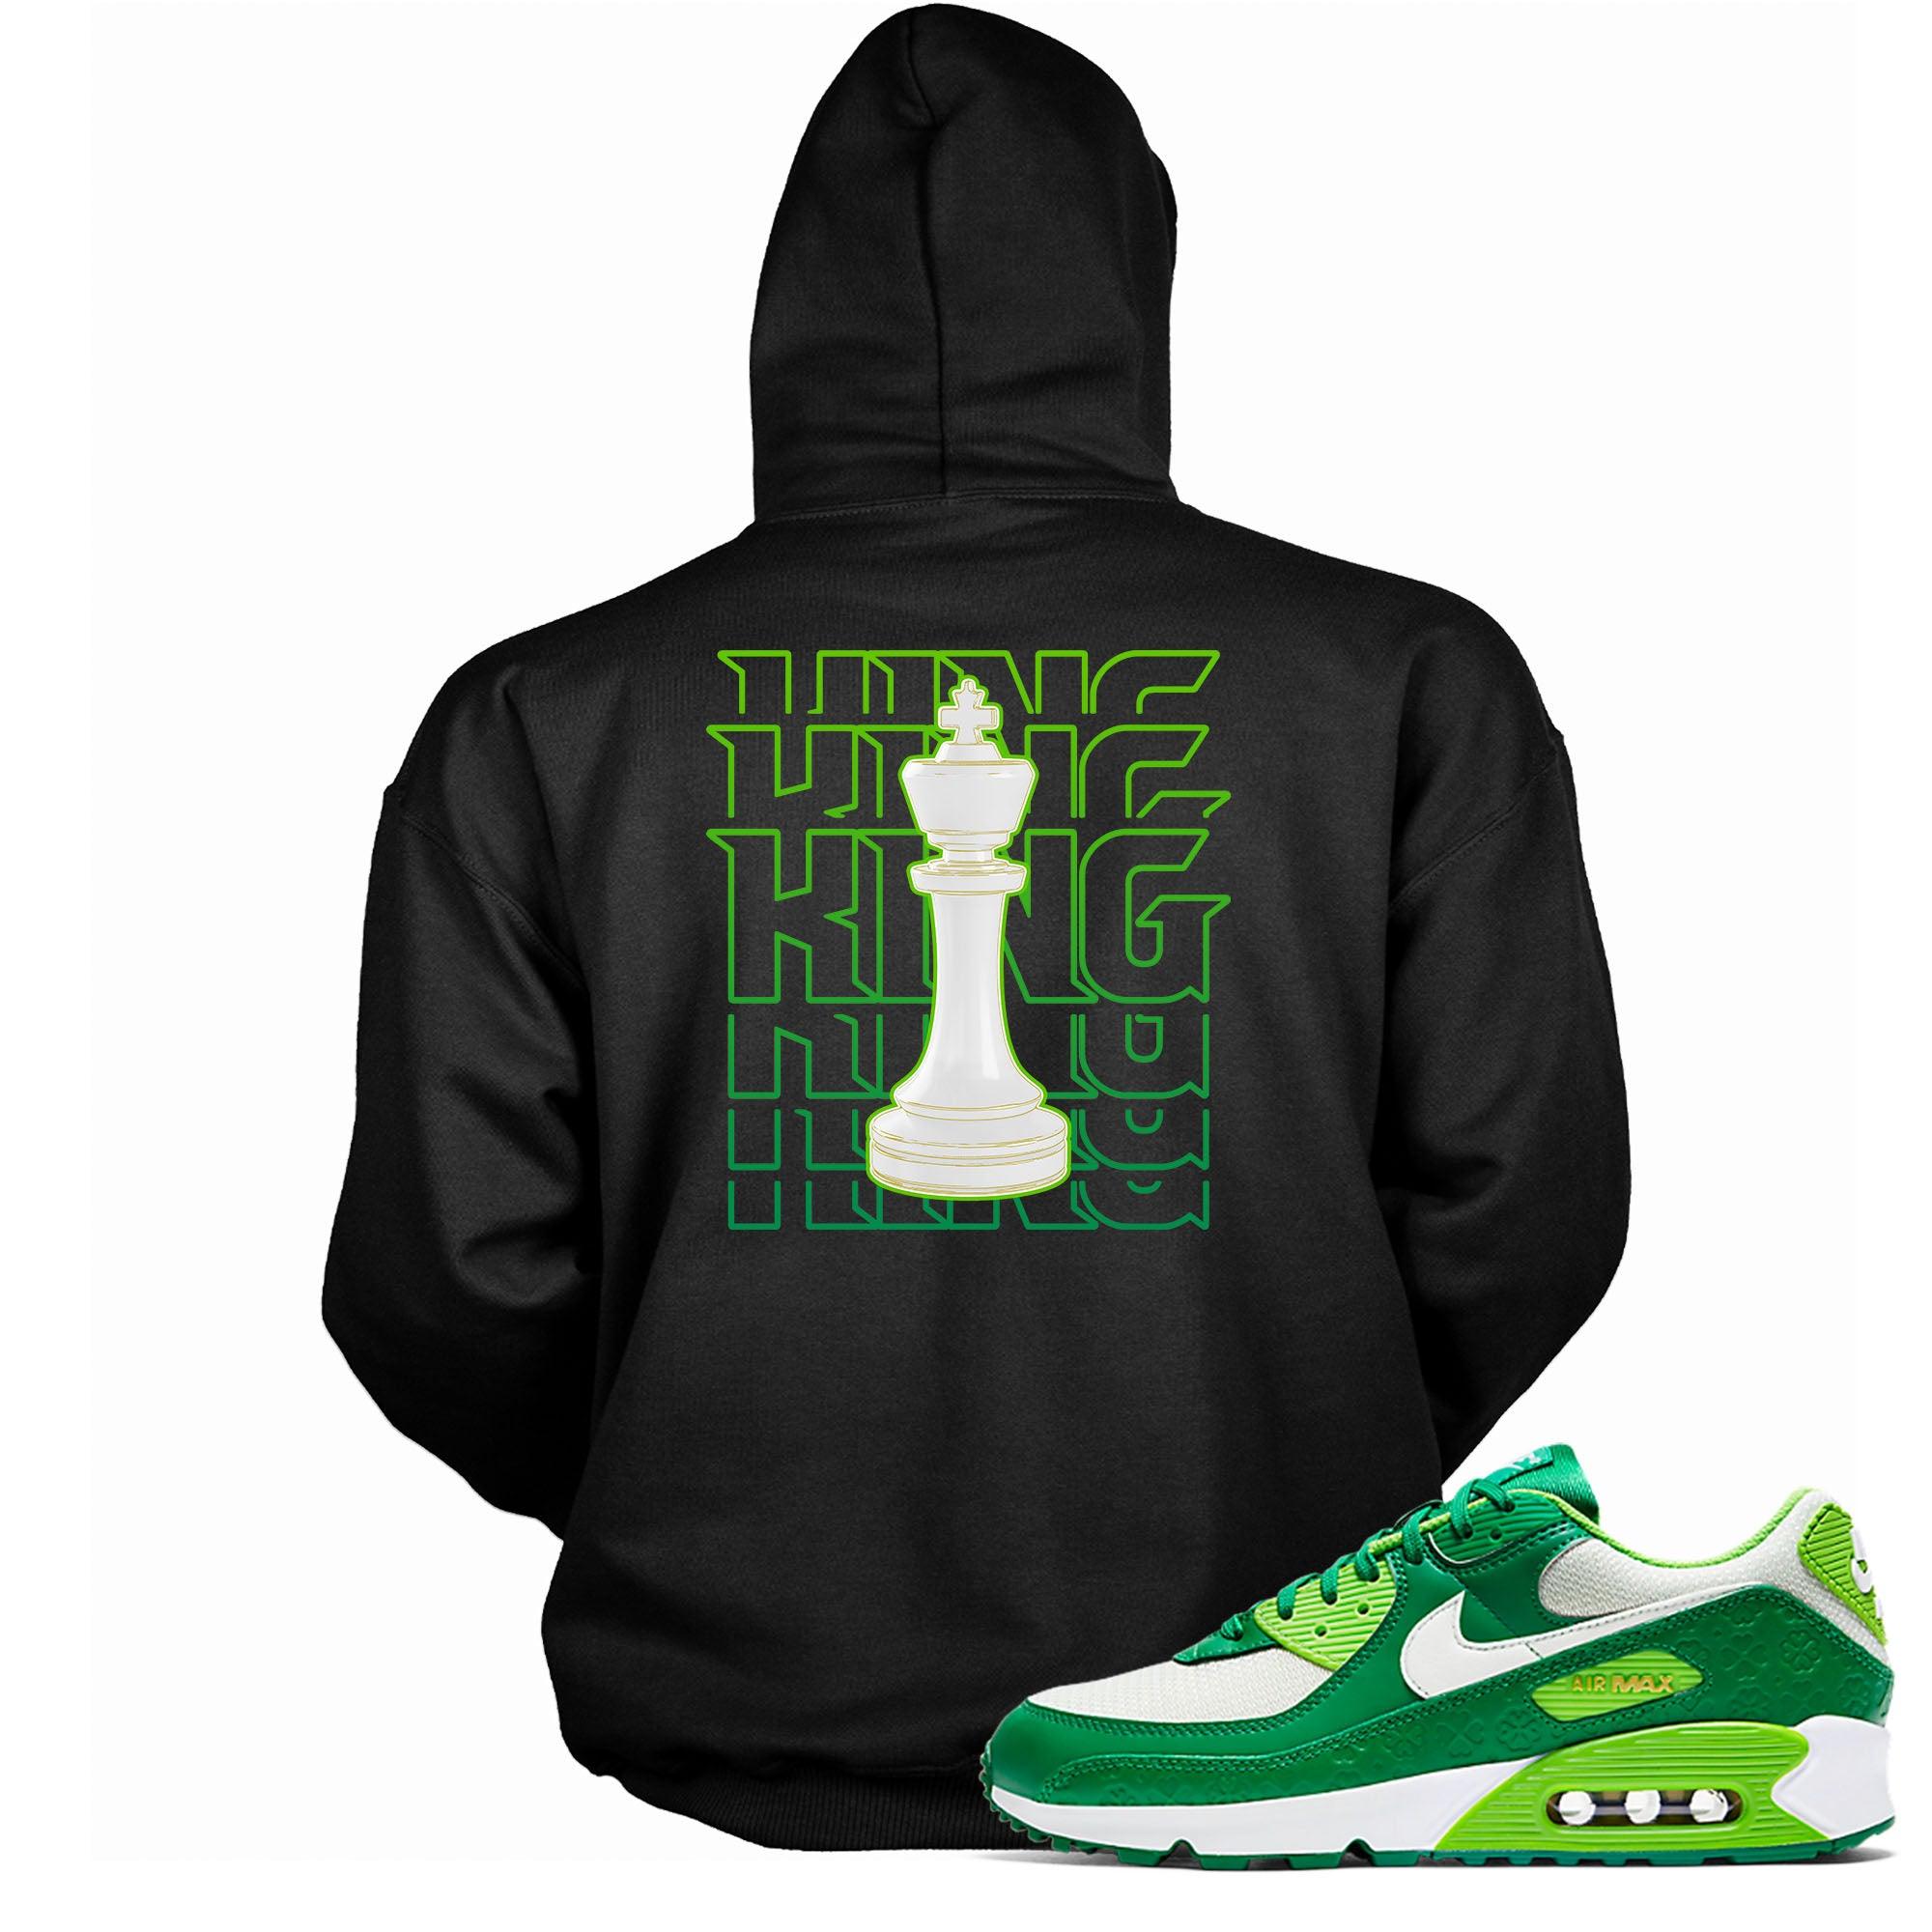 Black King Chess Hoodie Nike Air Max 90 St Patricks Day 2021 photo